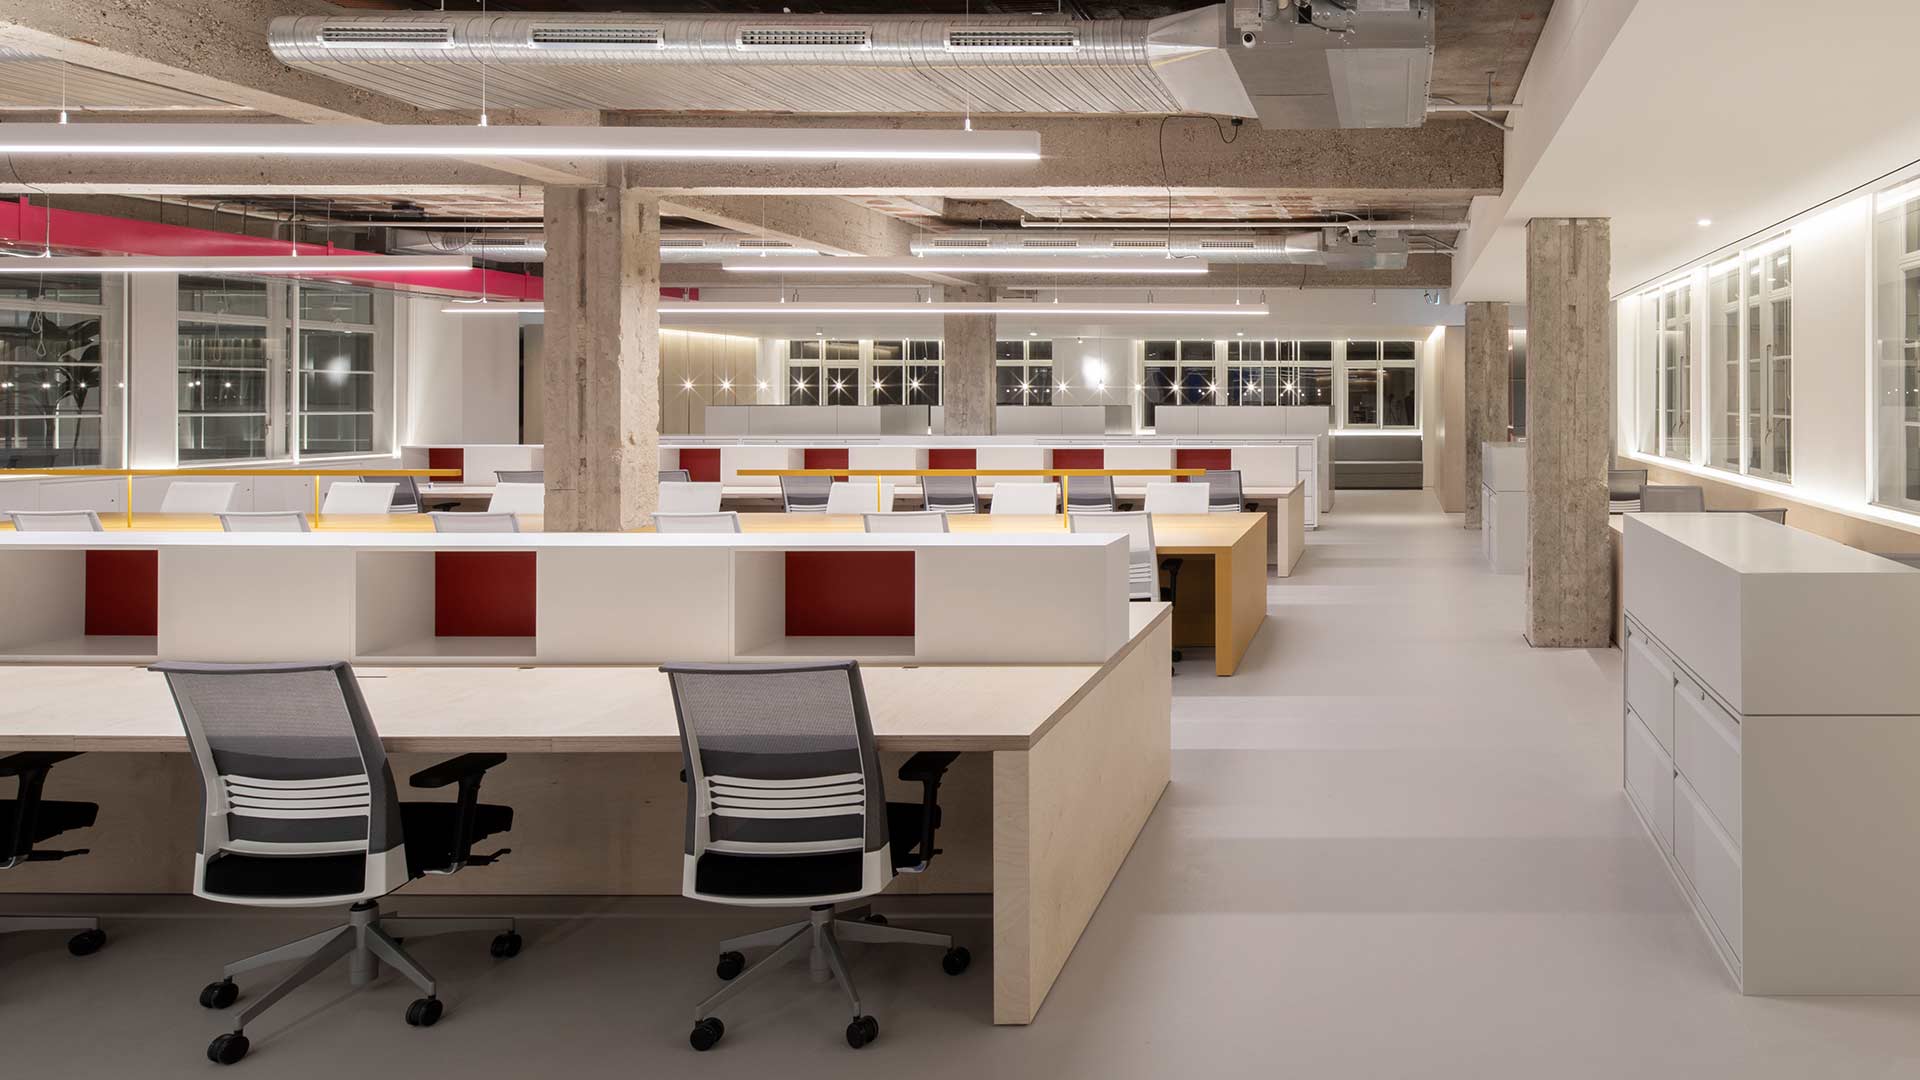 Architectural Lighting Design Open Plan Office Desks Exposed Ceilings Brutalist Interior Selfridges Buying Merchandising Offices Consultants Nulty